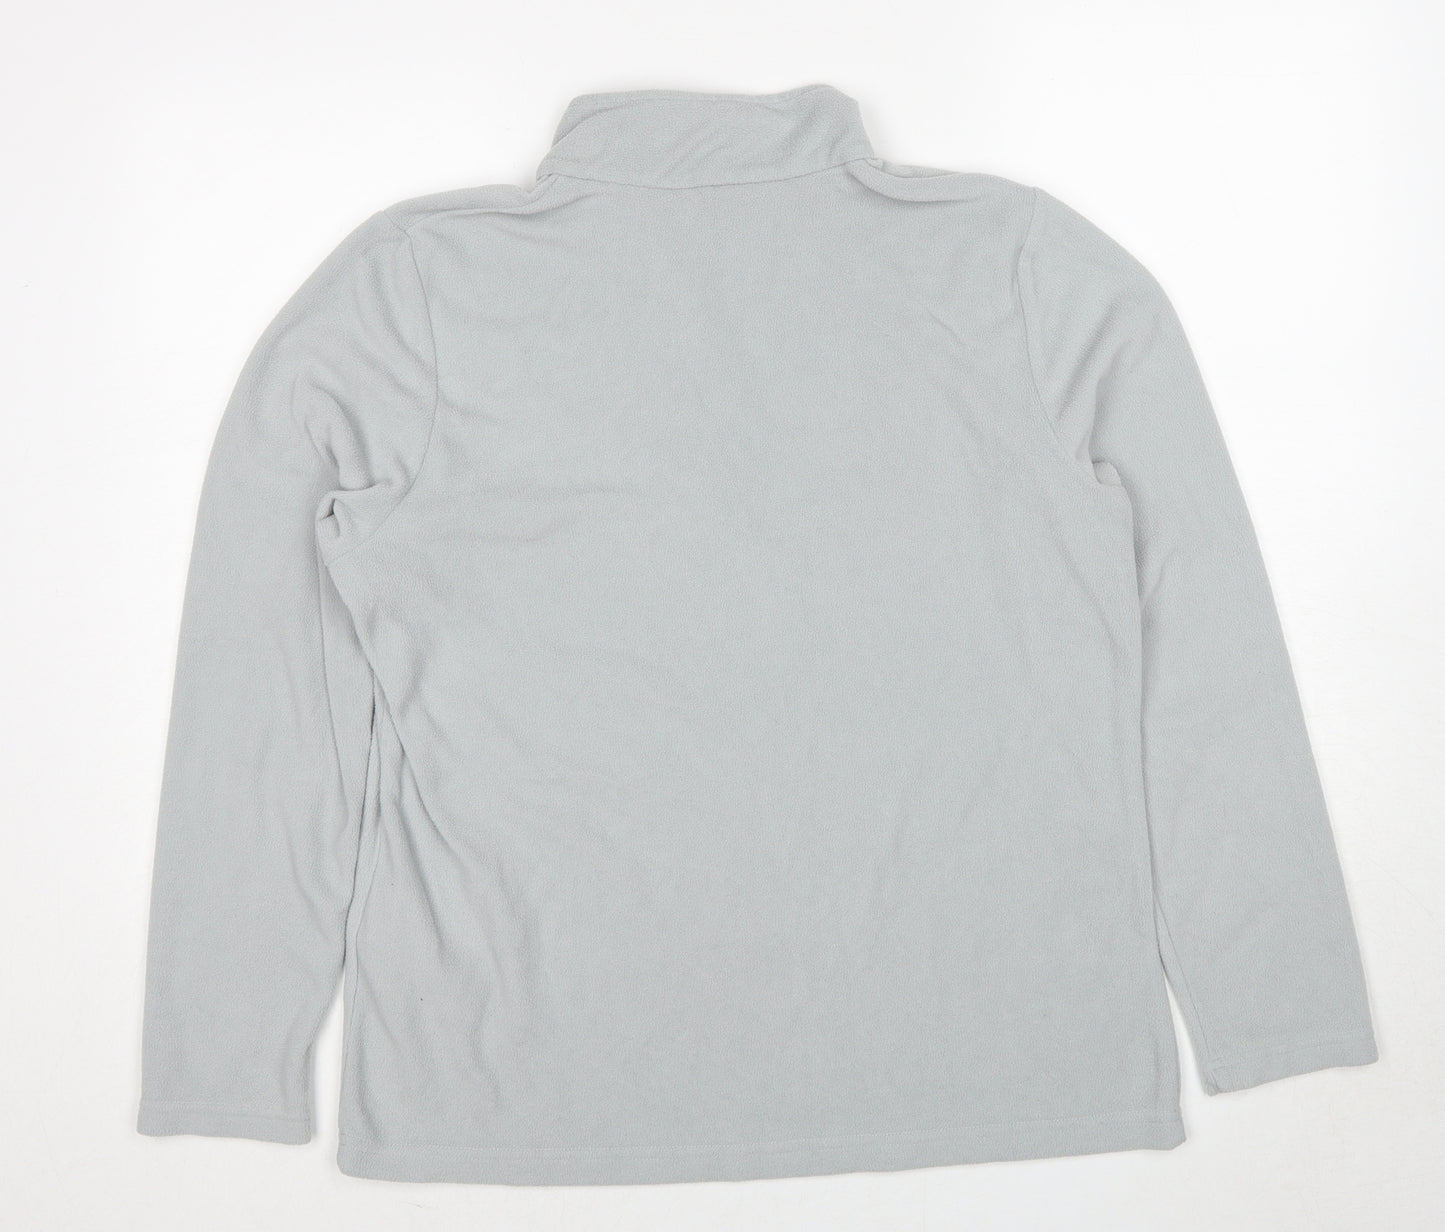 Regatta Womens Grey Polyester Pullover Sweatshirt Size 16 Pullover